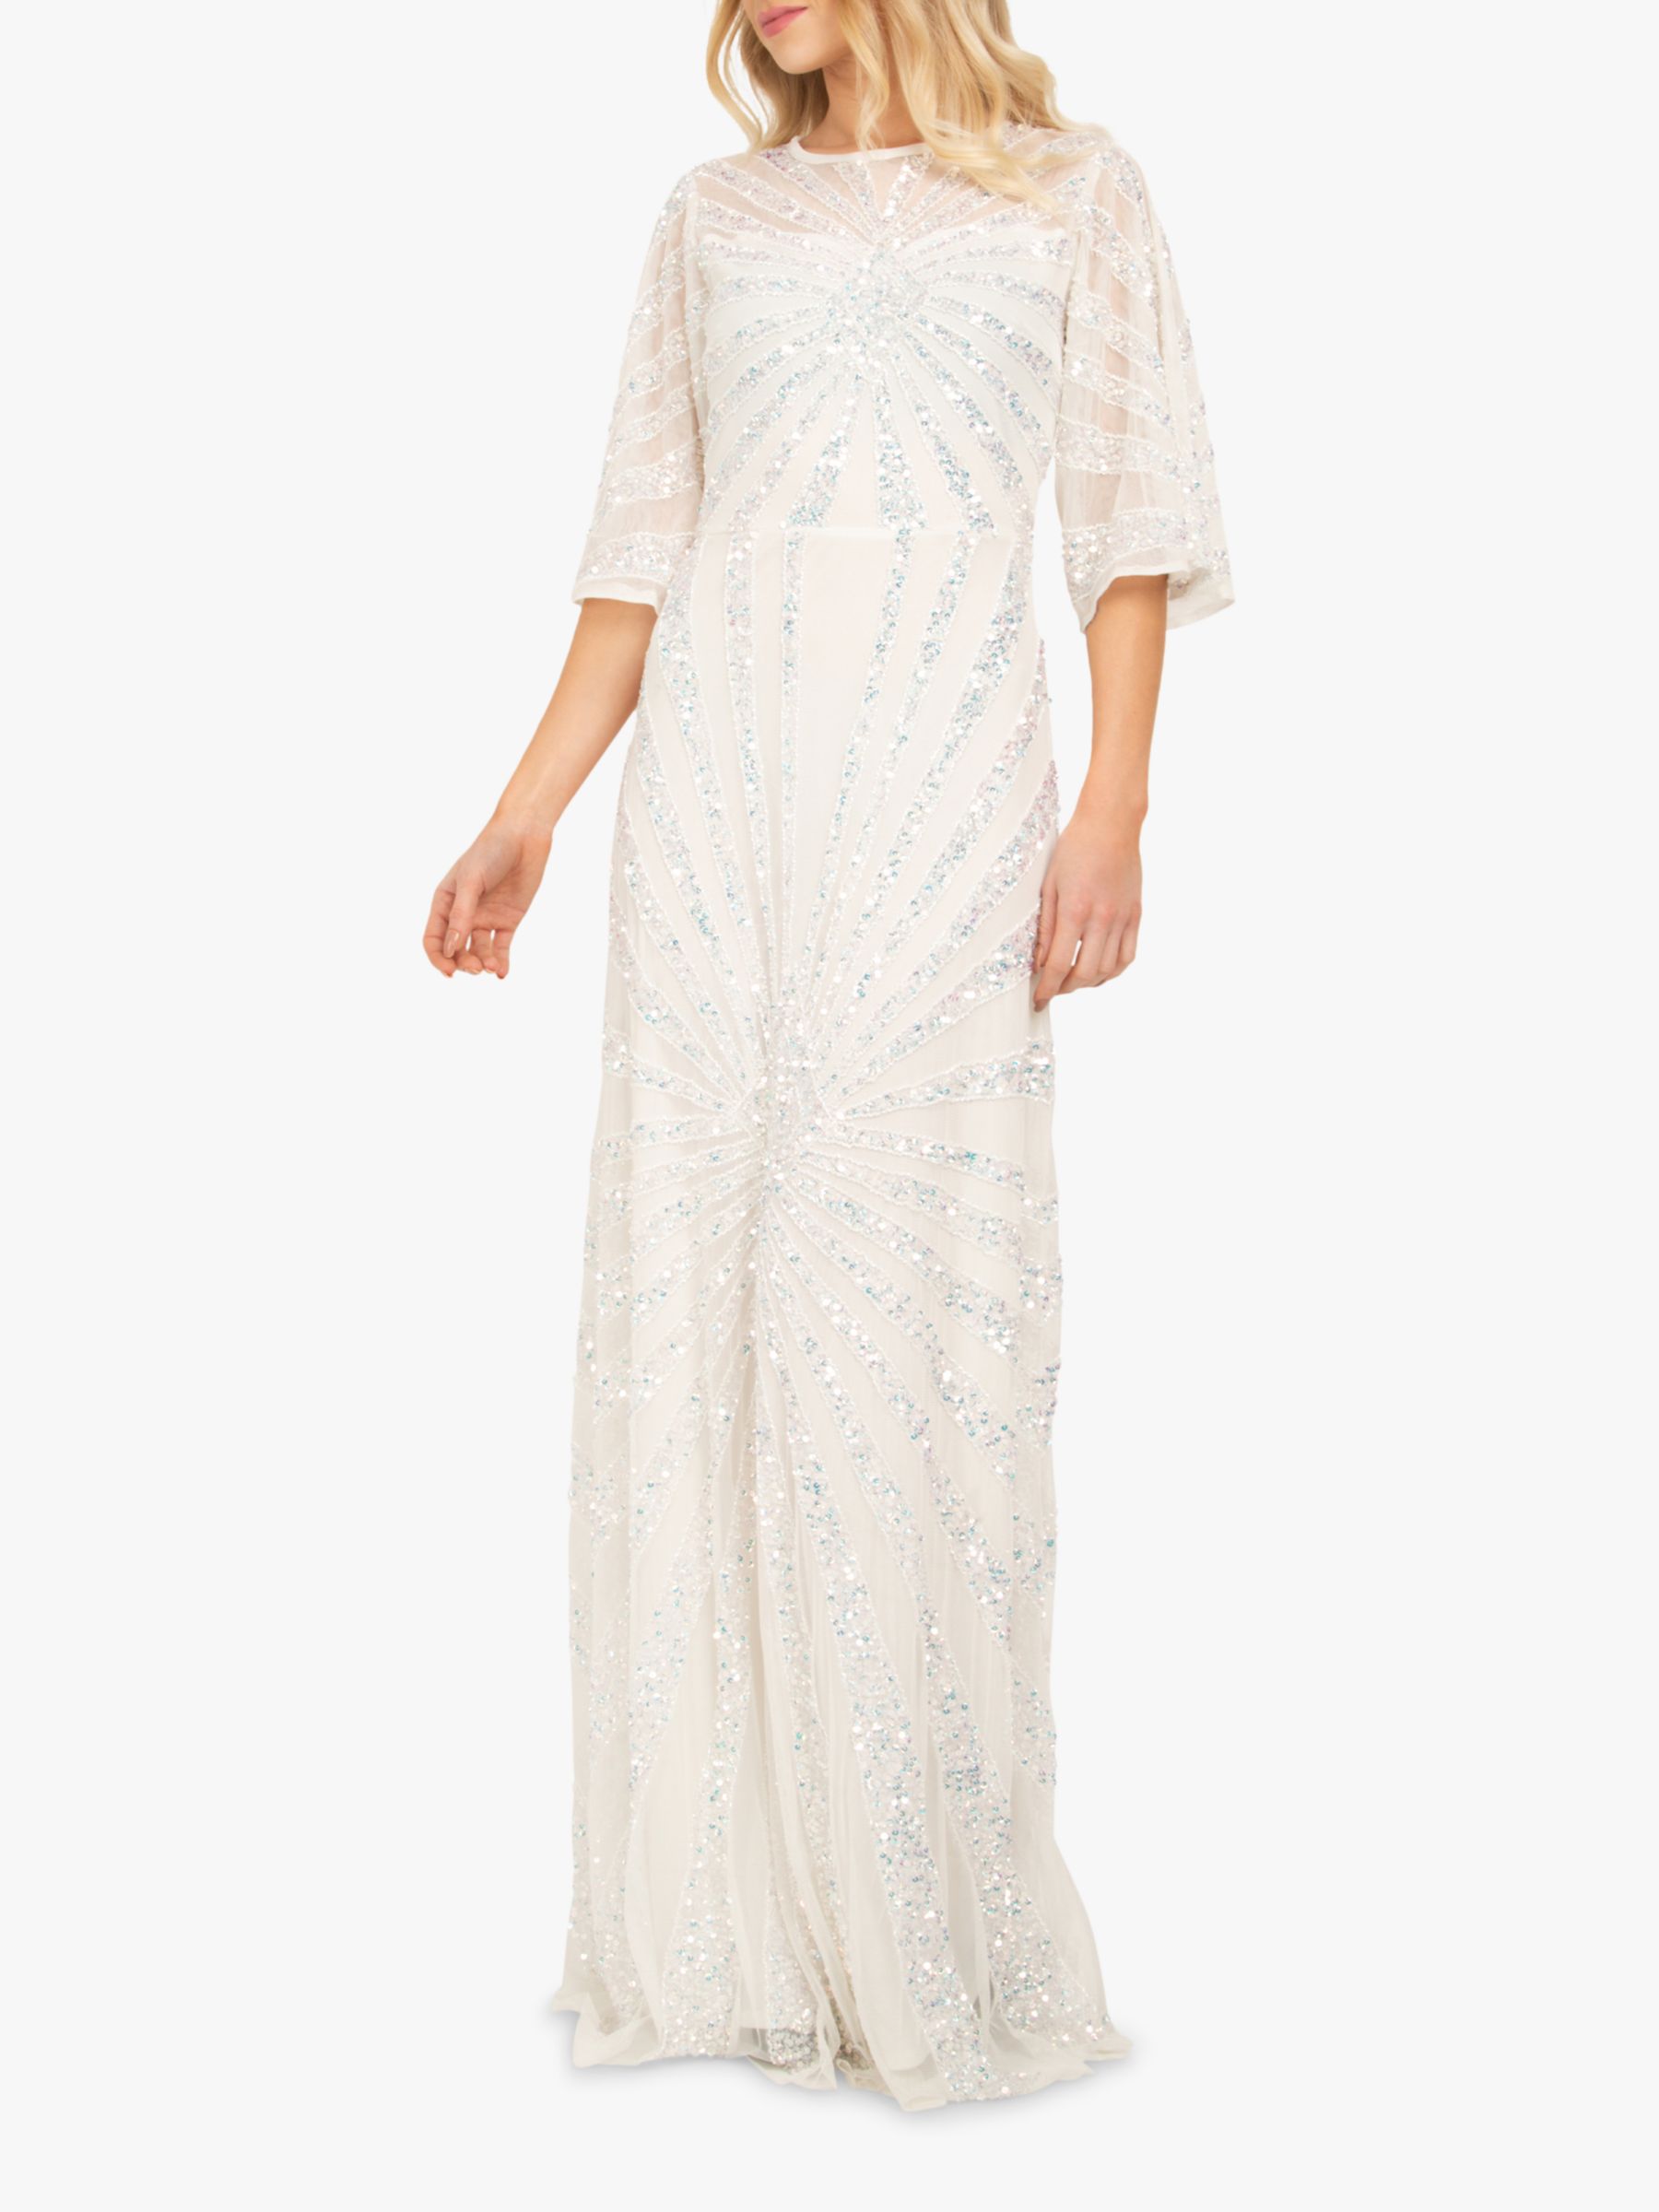 sequin white maxi dress